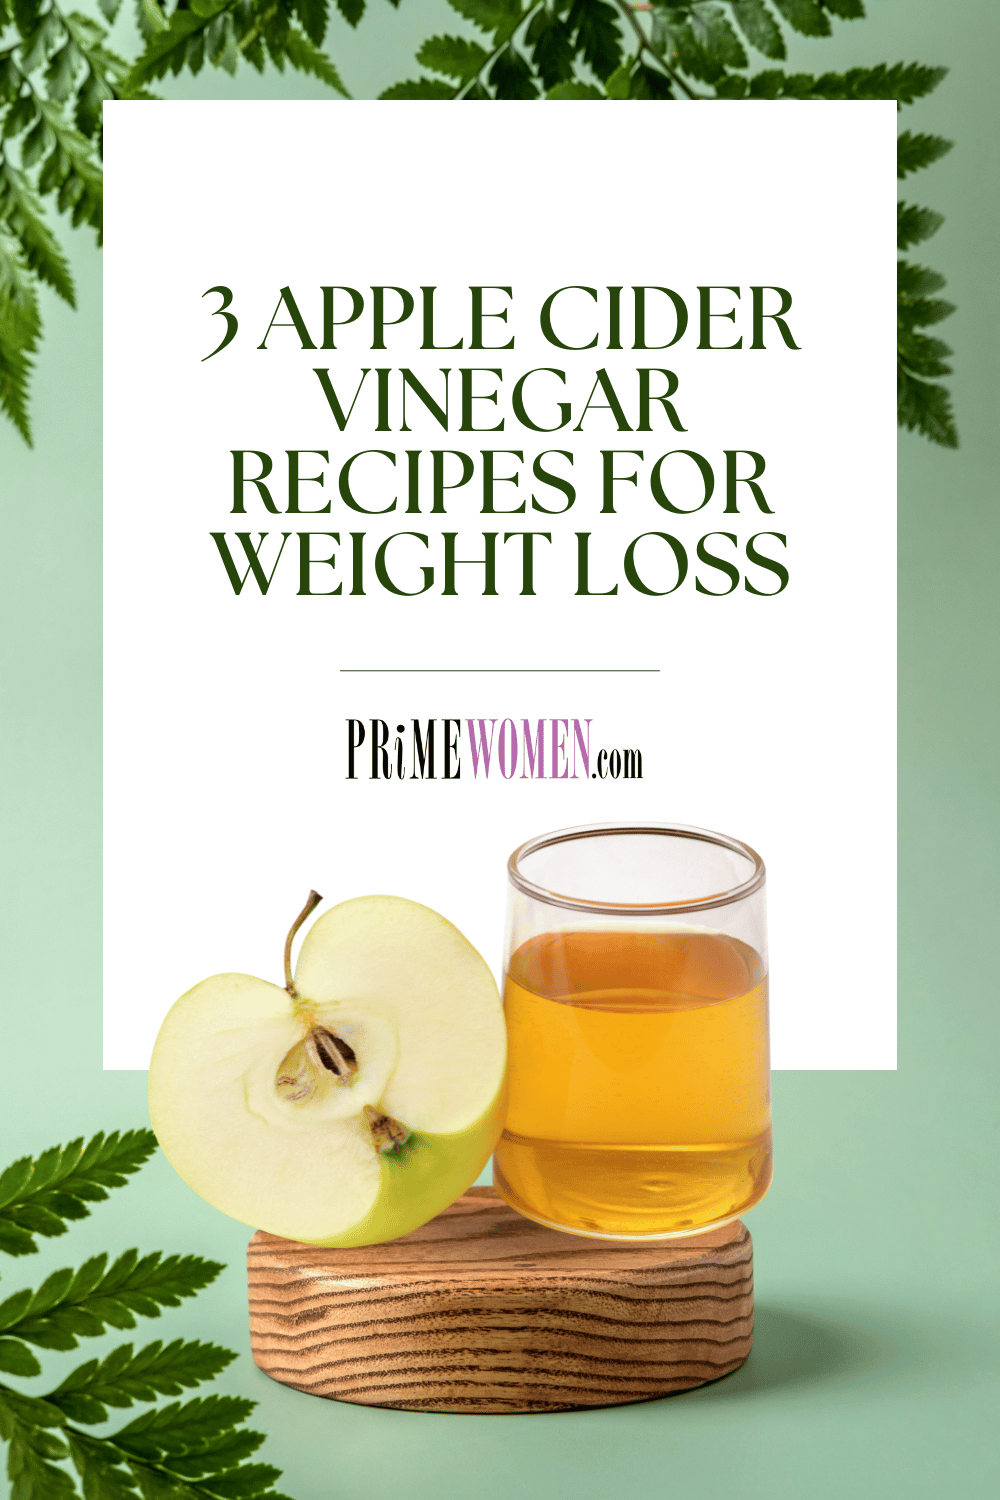 3 Apple cider vinegar recipes for weight loss